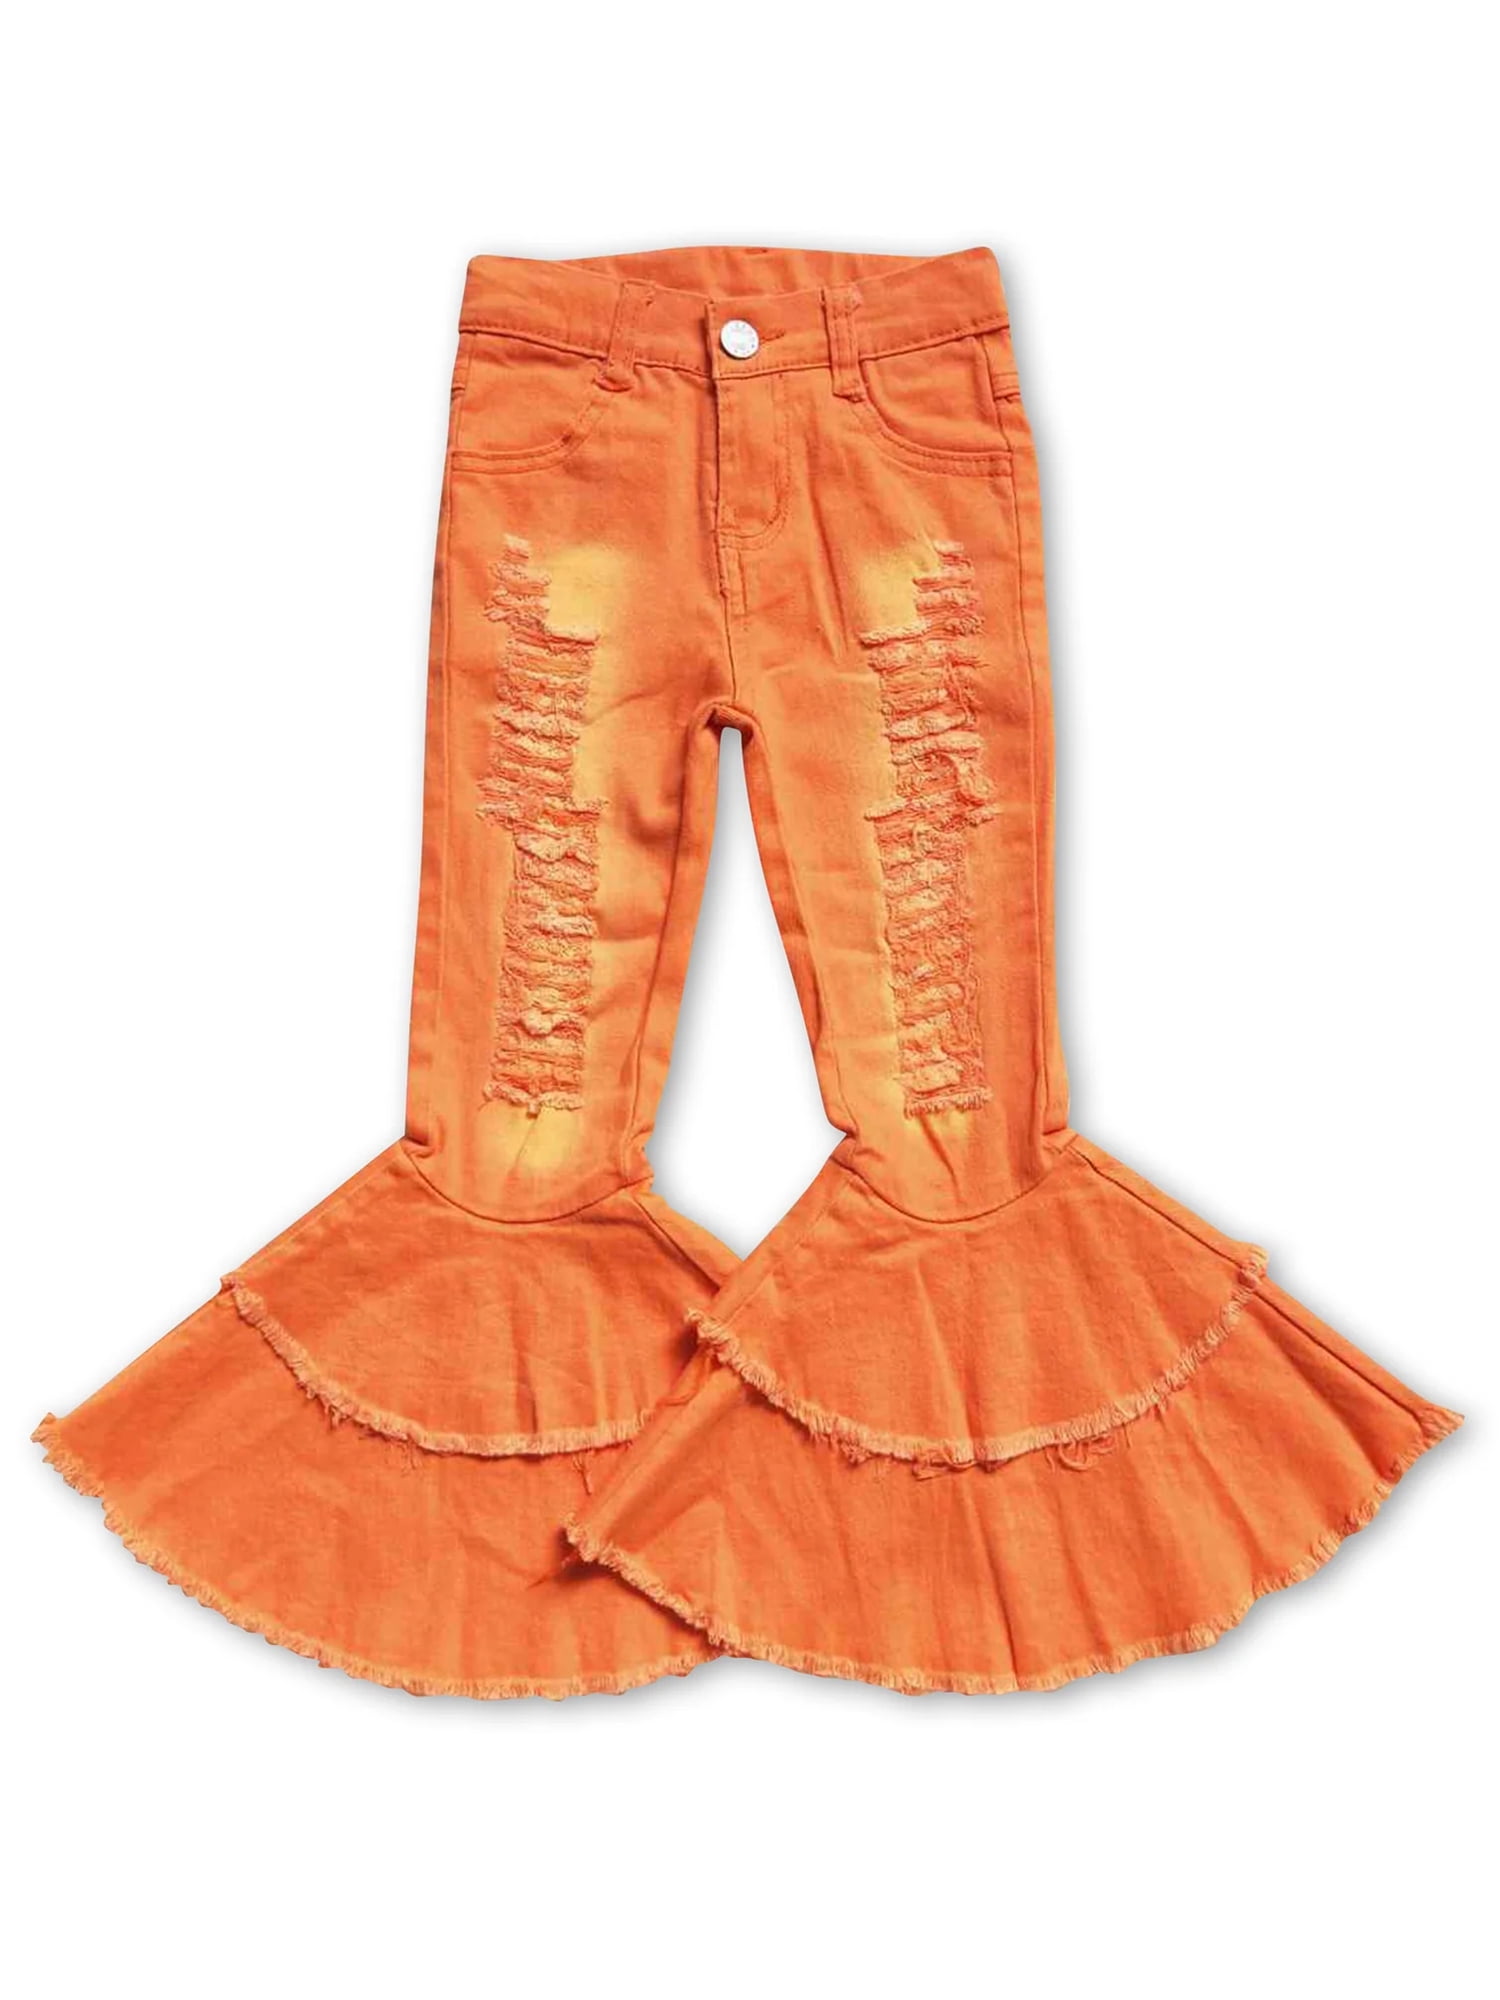 YAWOO Girls Fashion Ripped Kids Jeans Fall Orange Flare Denim Pants ...